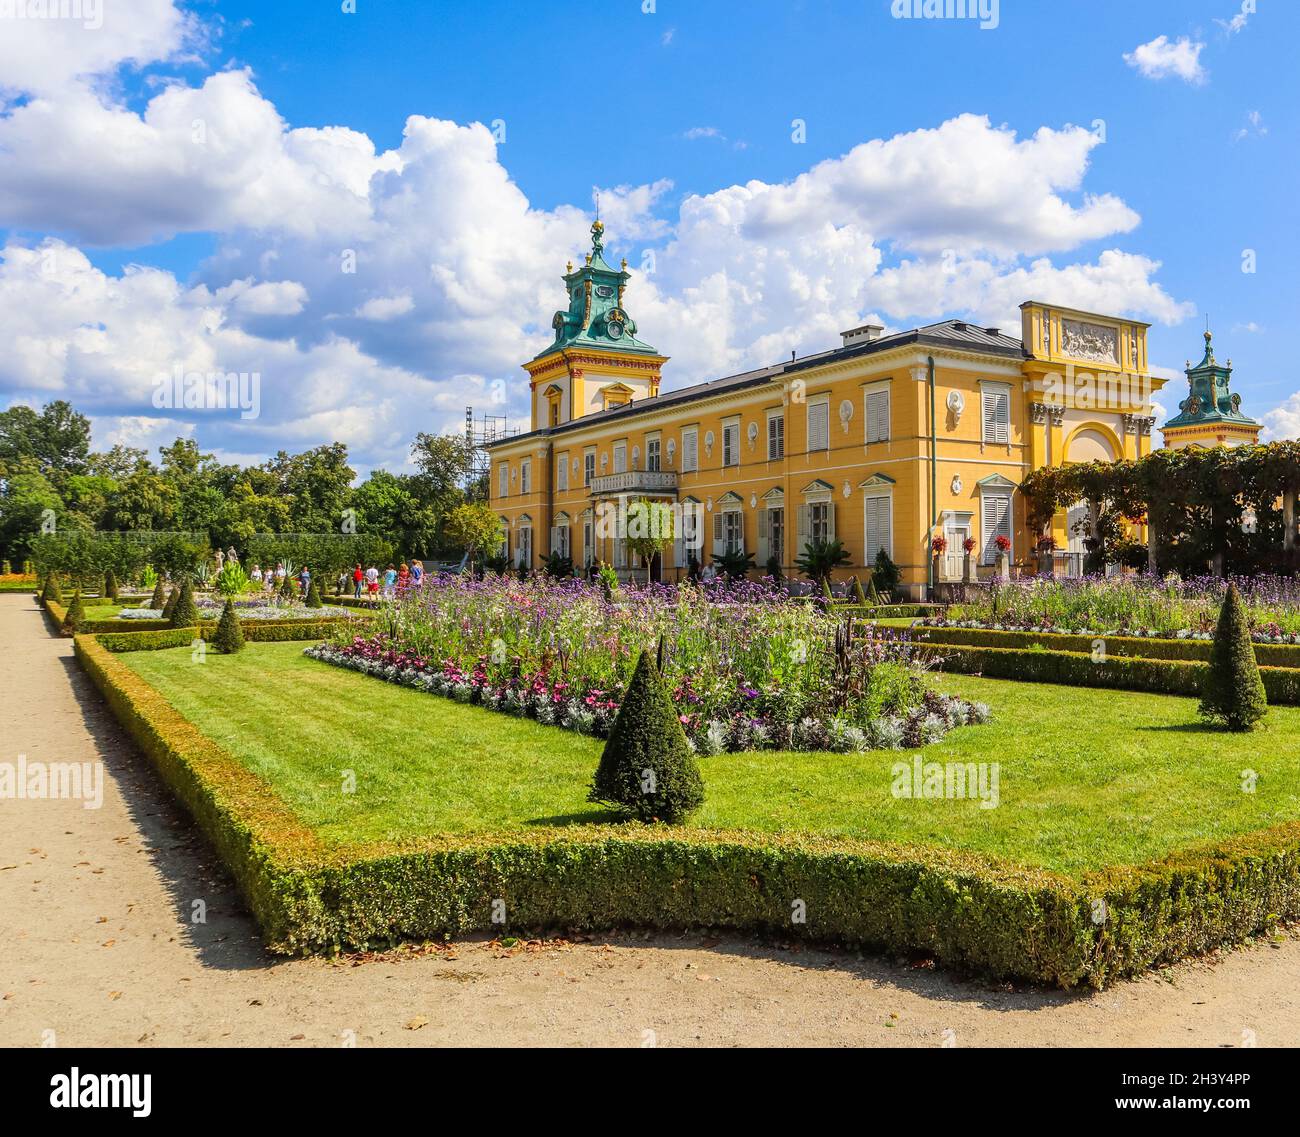 Royal Wilanow Palace in Warsaw. Residence of King John III Sobieski. Poland. August 2019 Stock Photo